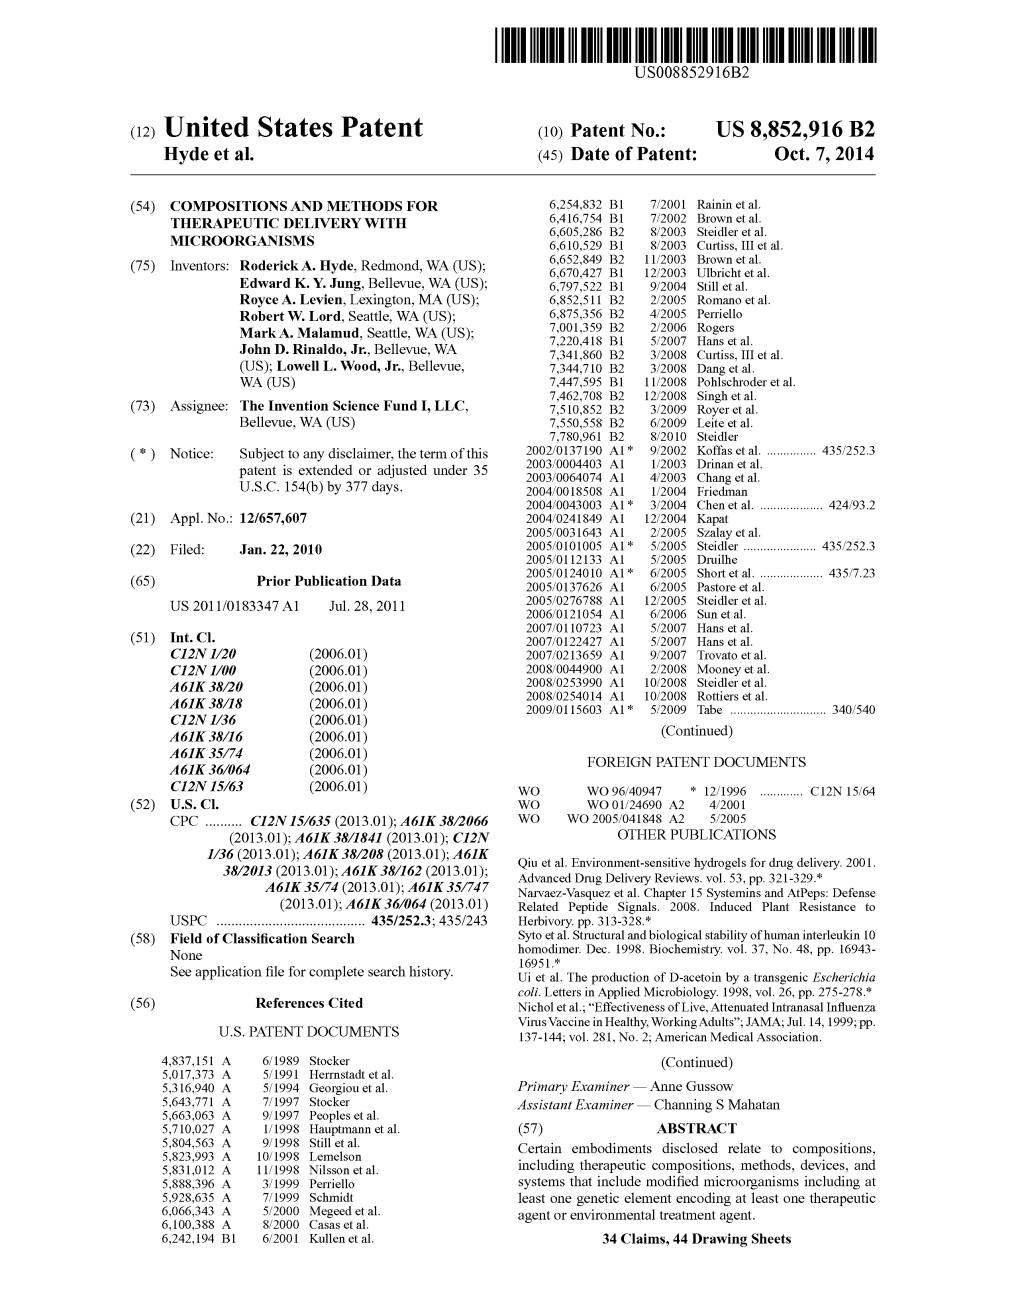 (12) United States Patent (10) Patent No.: US 8,852,916 B2 Hyde Et Al